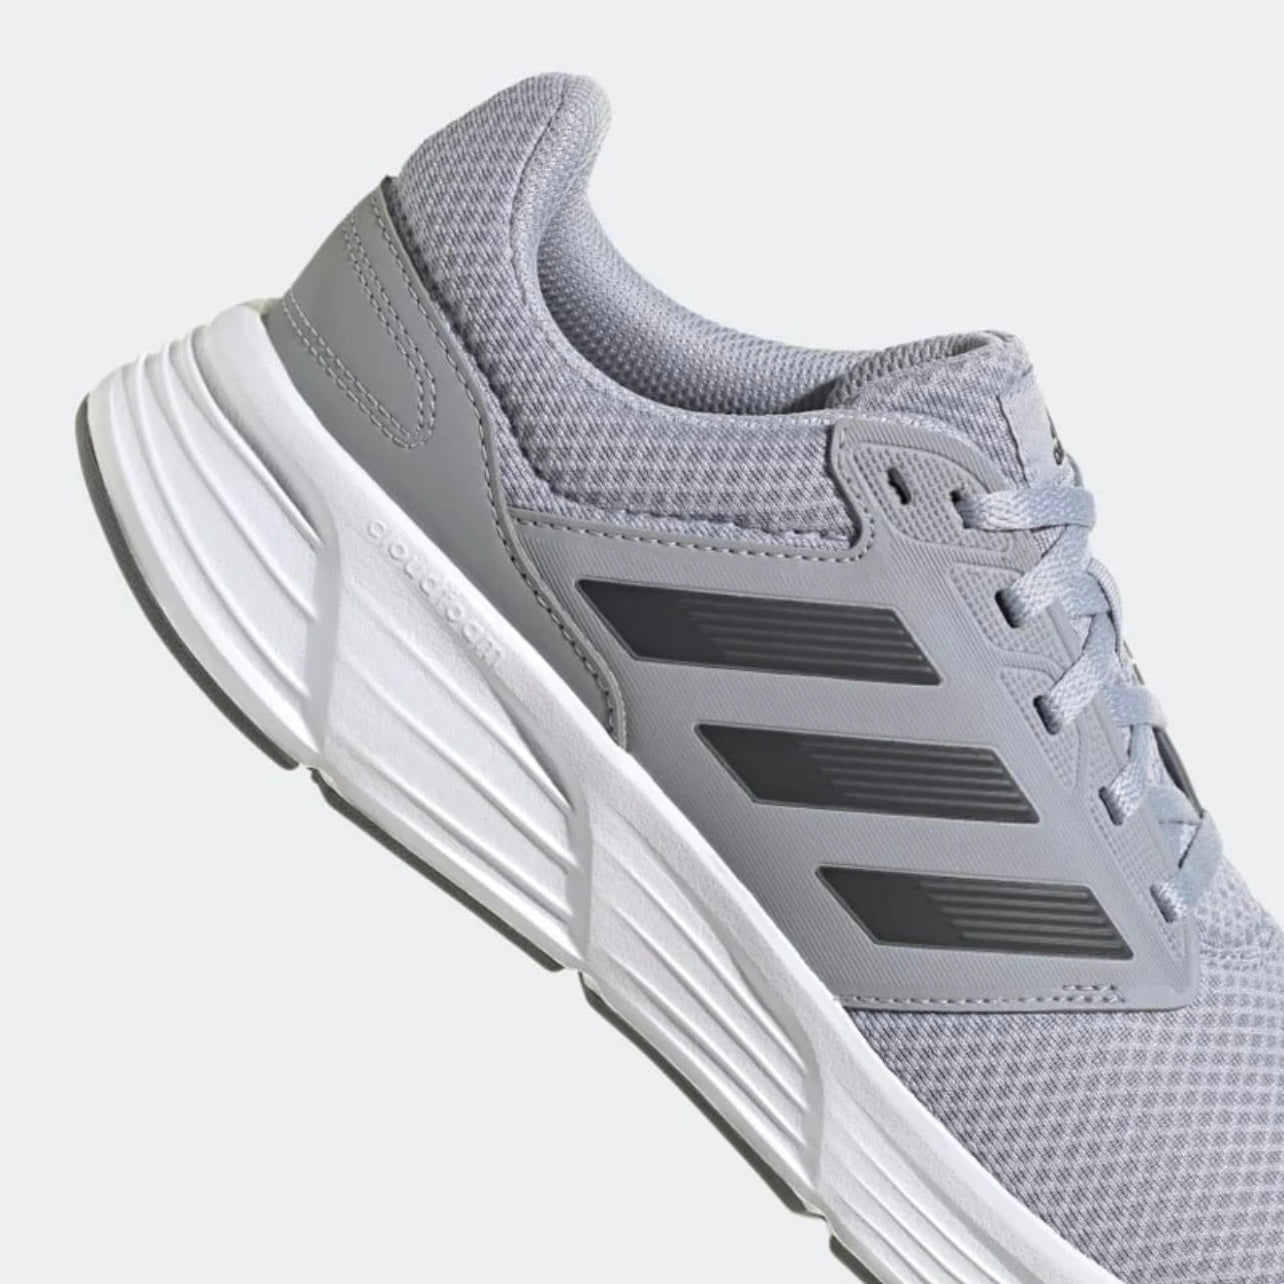 Adidas sneakers for men in Gray